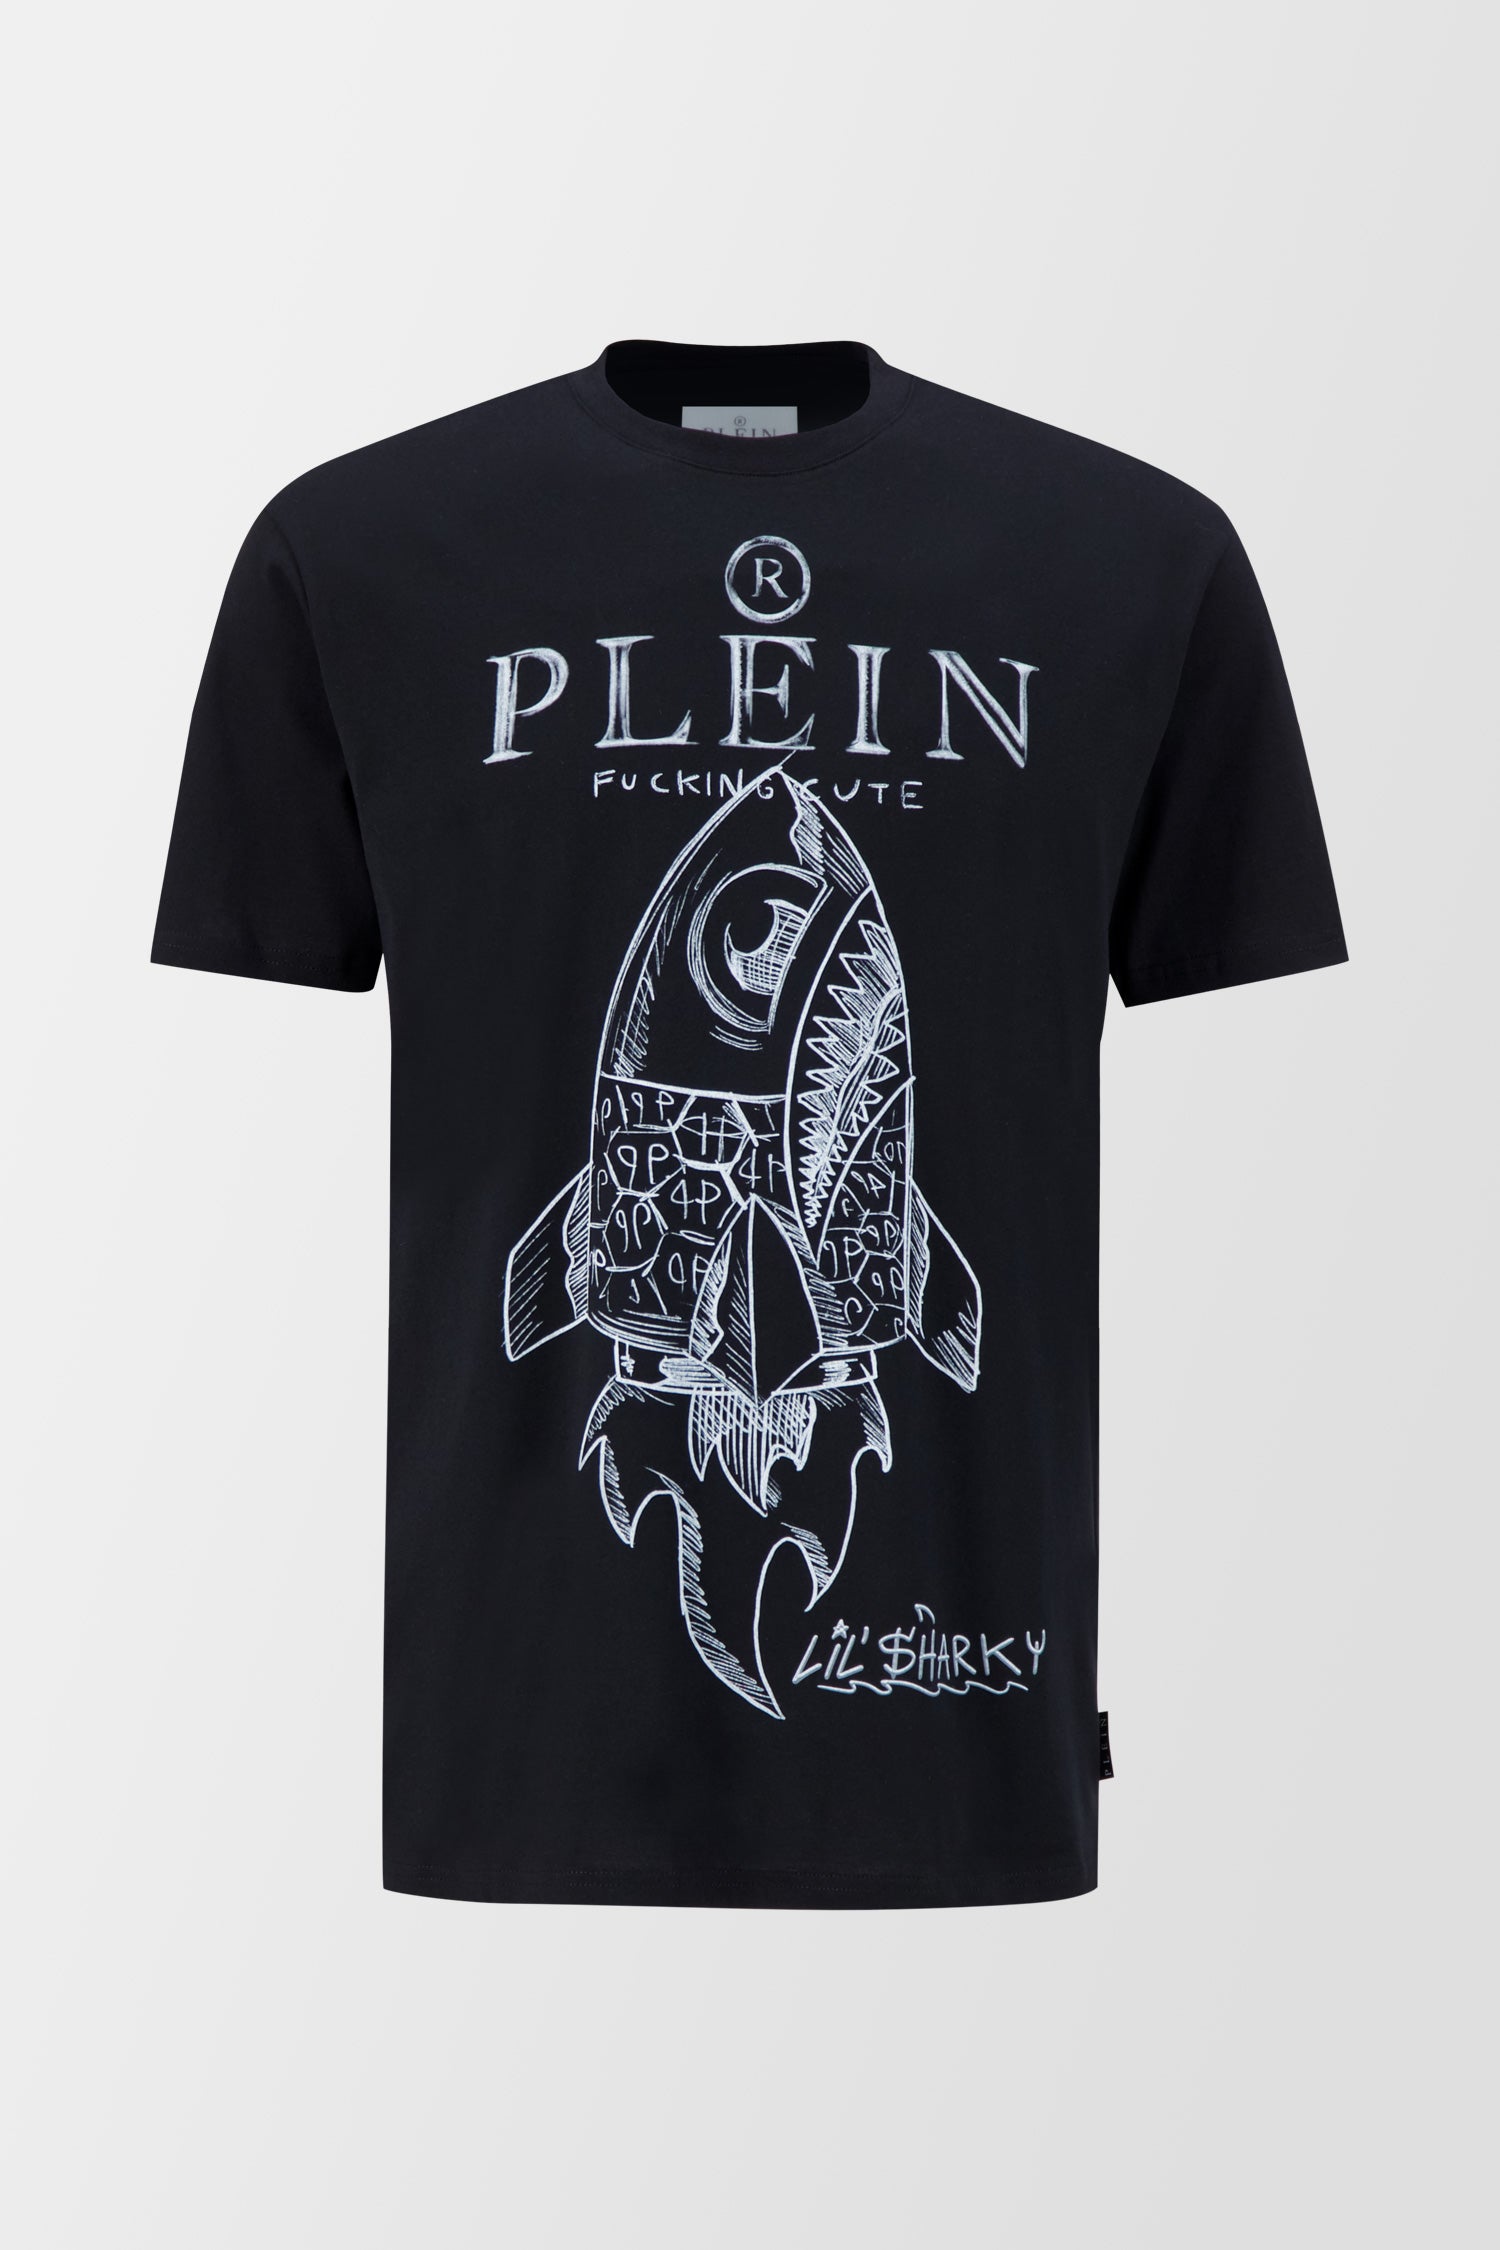 Philipp Plein Black Shark T-Shirt